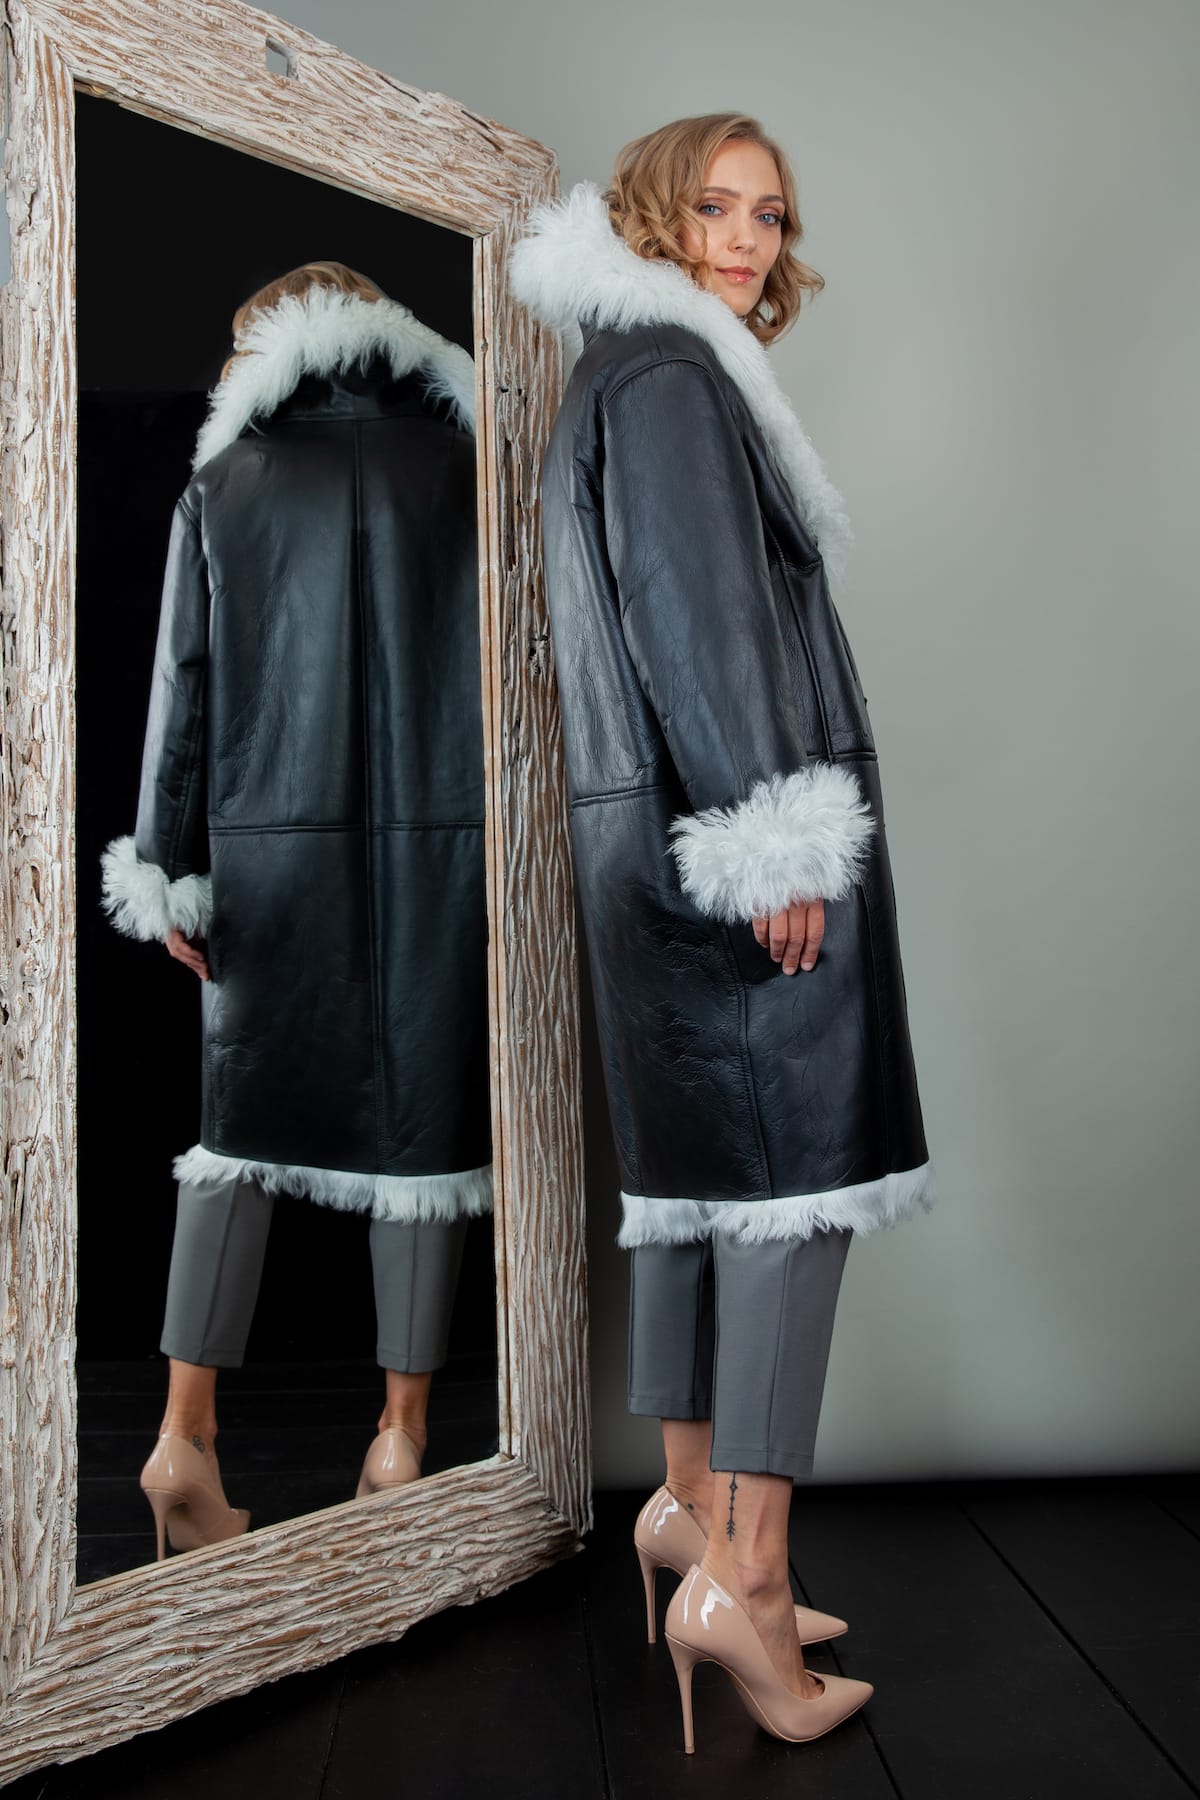 White Fur-Lined & Black Leather Sheepskin Coat | Handmade by NordFur